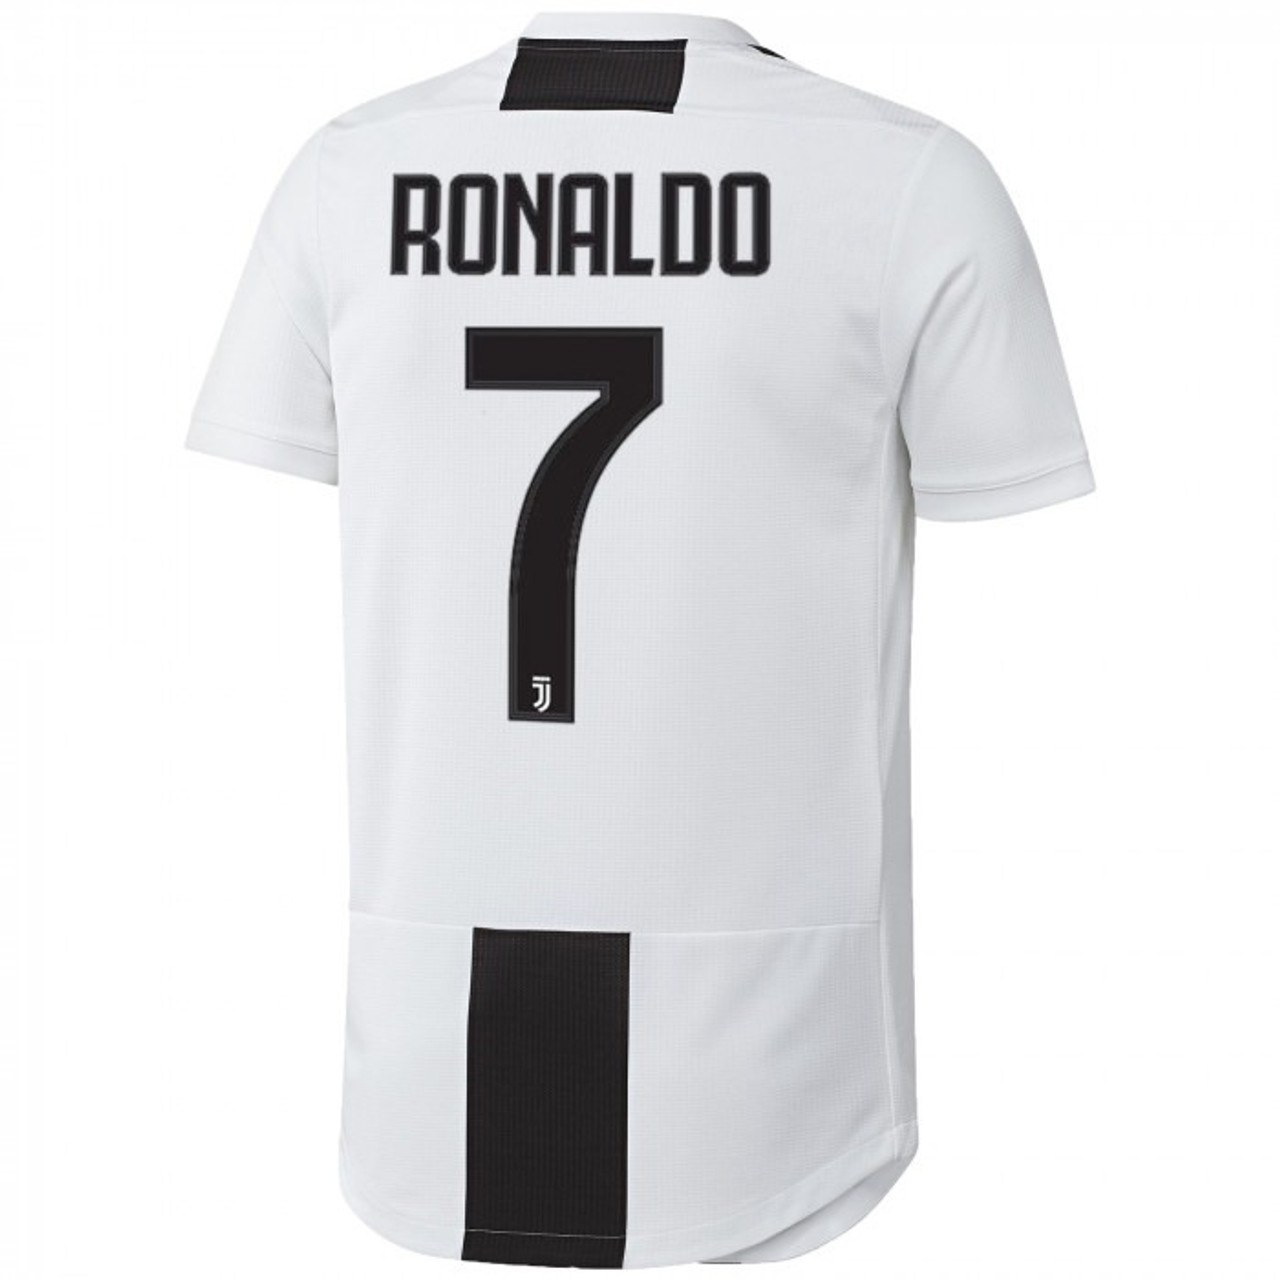 ronaldo jersey 2019